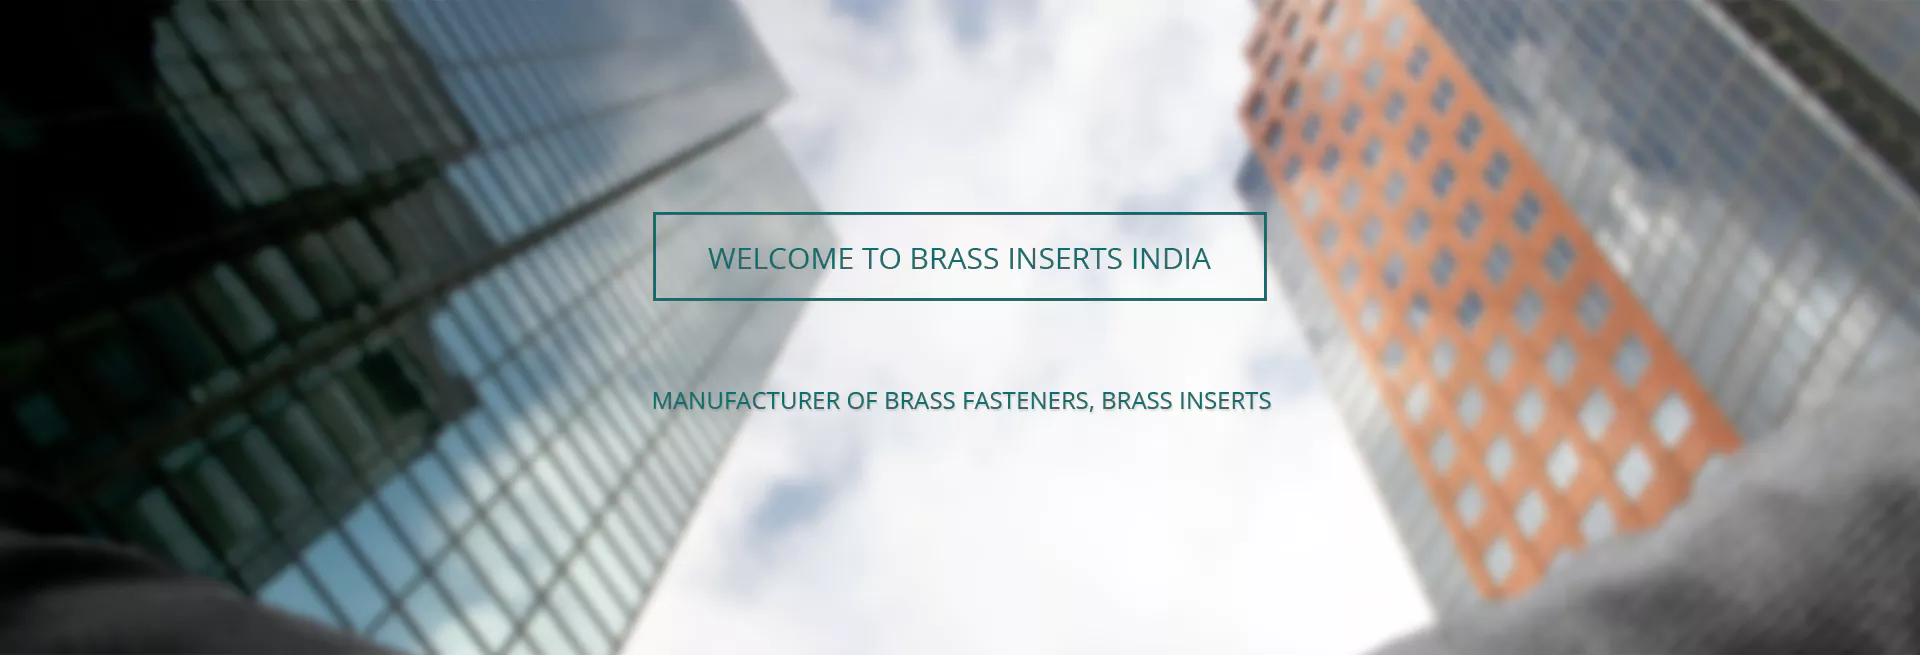 Brass Inserts India banner